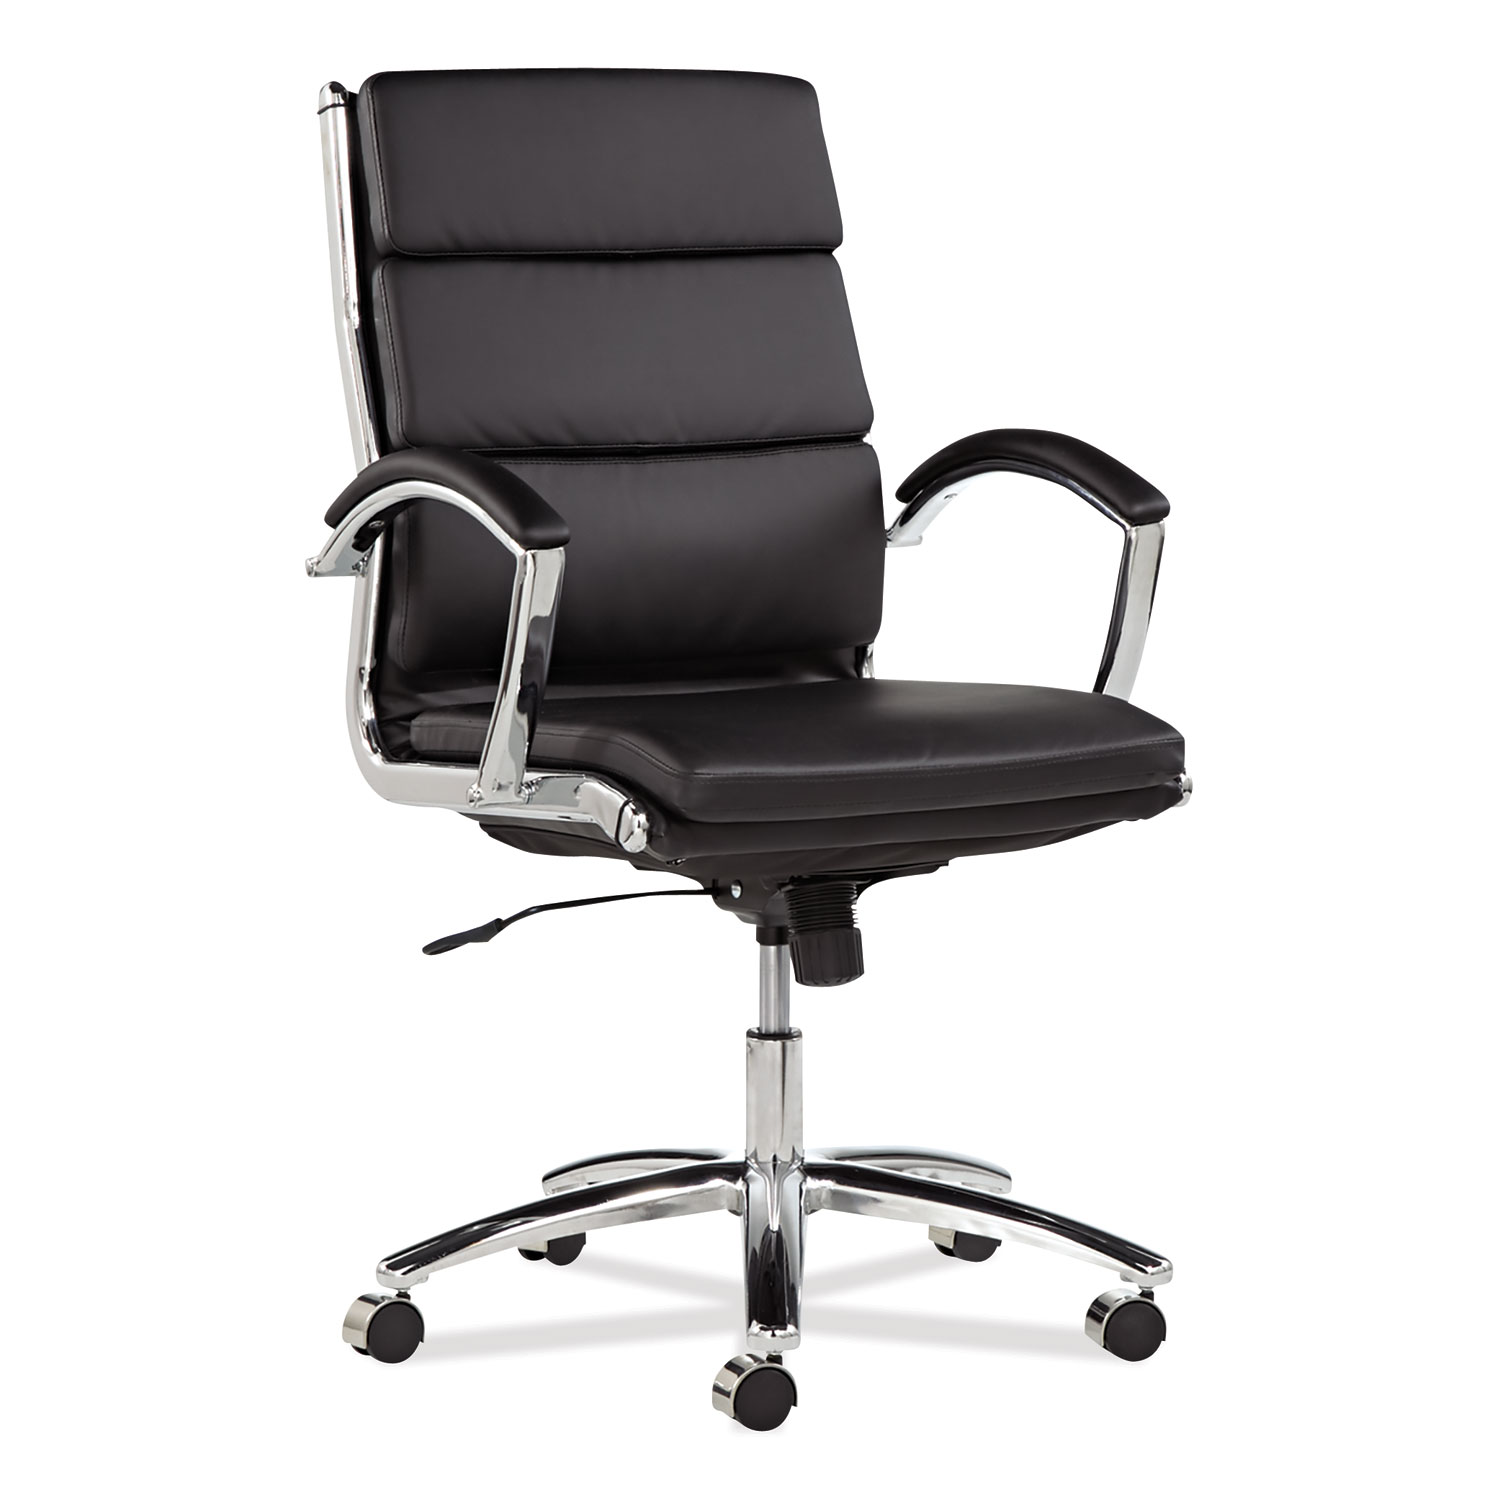  Alera ALENR4219 Alera Neratoli Mid-Back Slim Profile Chair, Supports up to 275 lbs., Black Seat/Black Back, Chrome Base (ALENR4219) 